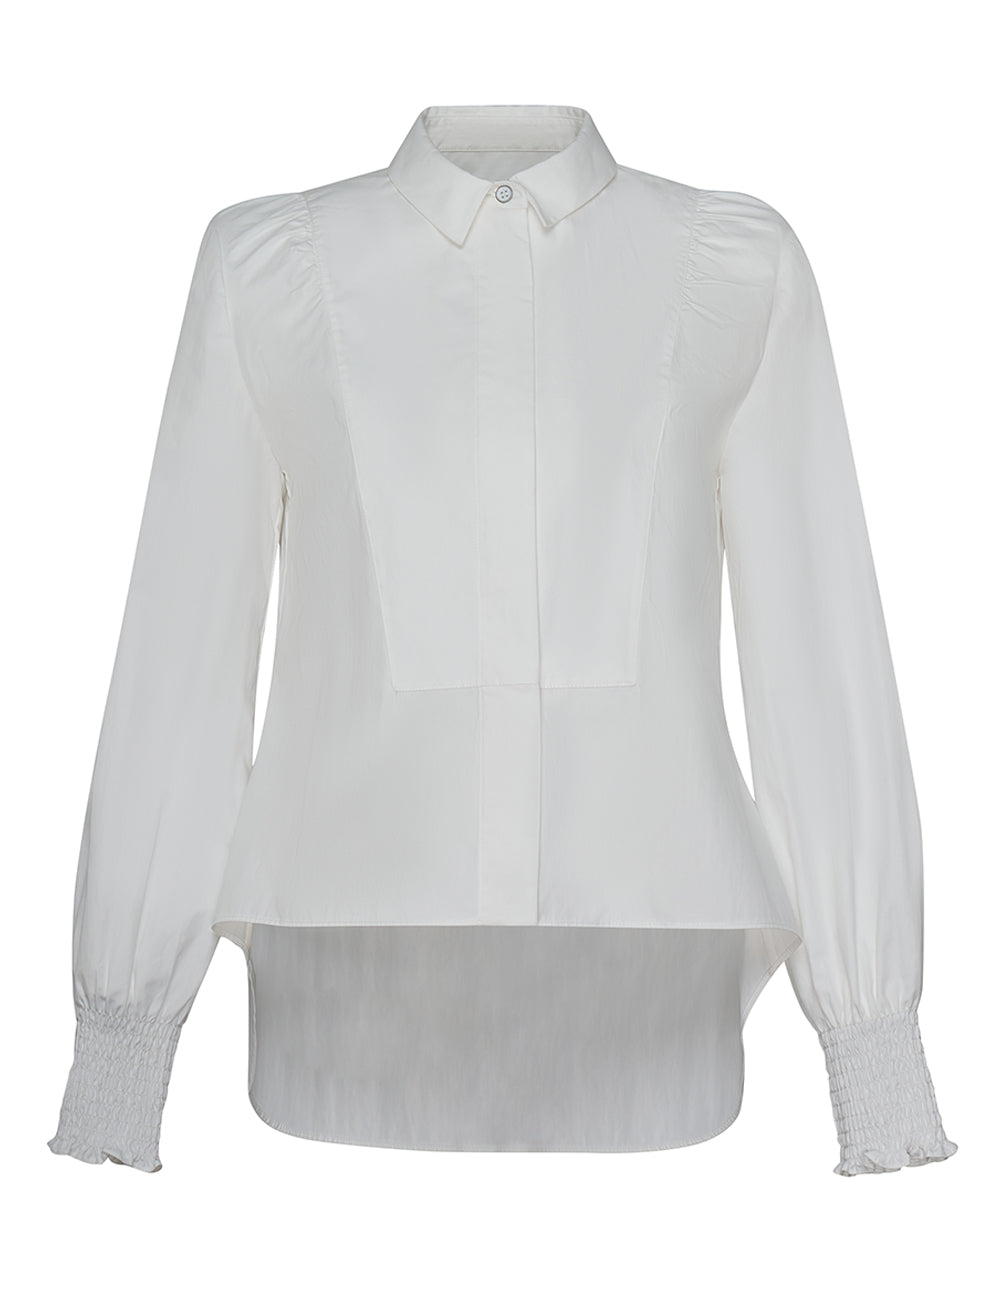 Club21 Collection Cotton Nylon Padded Shirt (White)